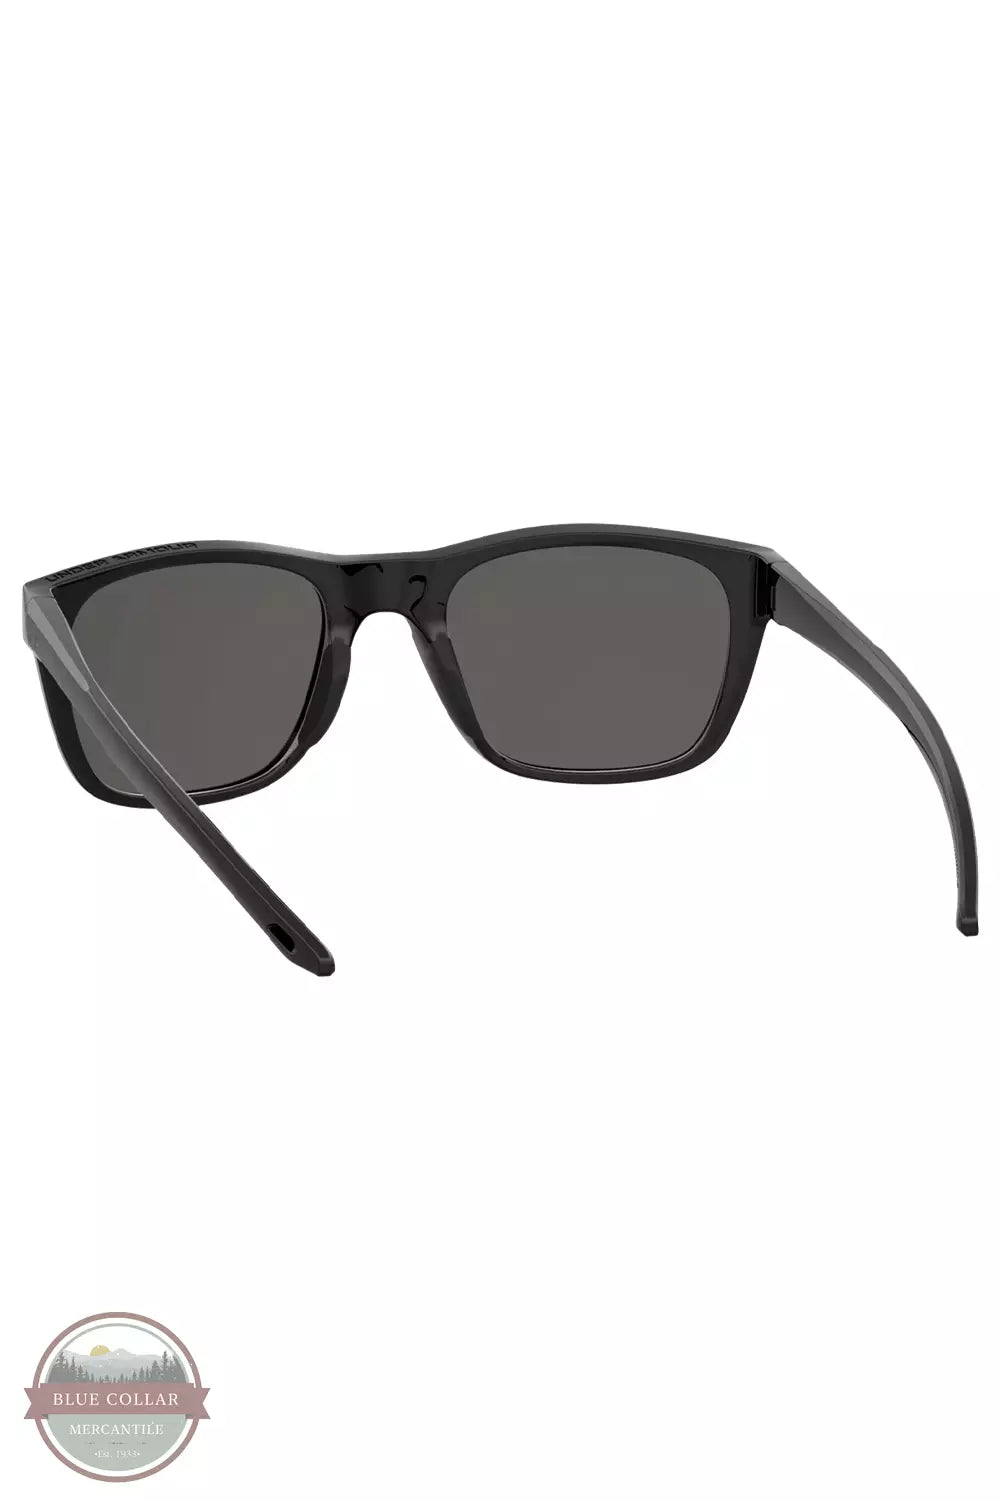 Under Armour 1368126-002 Raid Sunglasses in Shiny Black / Dark Ruthenium Inside View